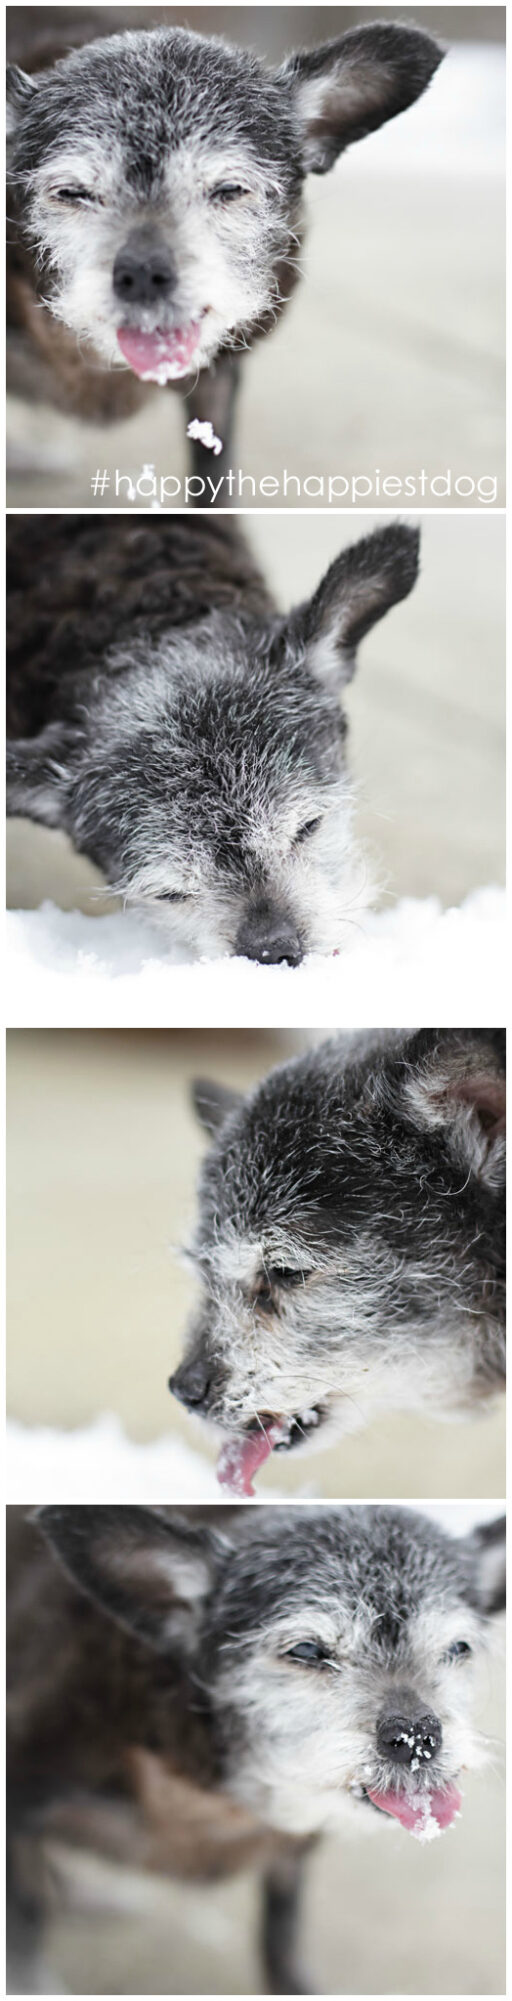 Happy Happily Eating Snow - Happy the Happiest Dog - Senior Rescue - Dog Adoption